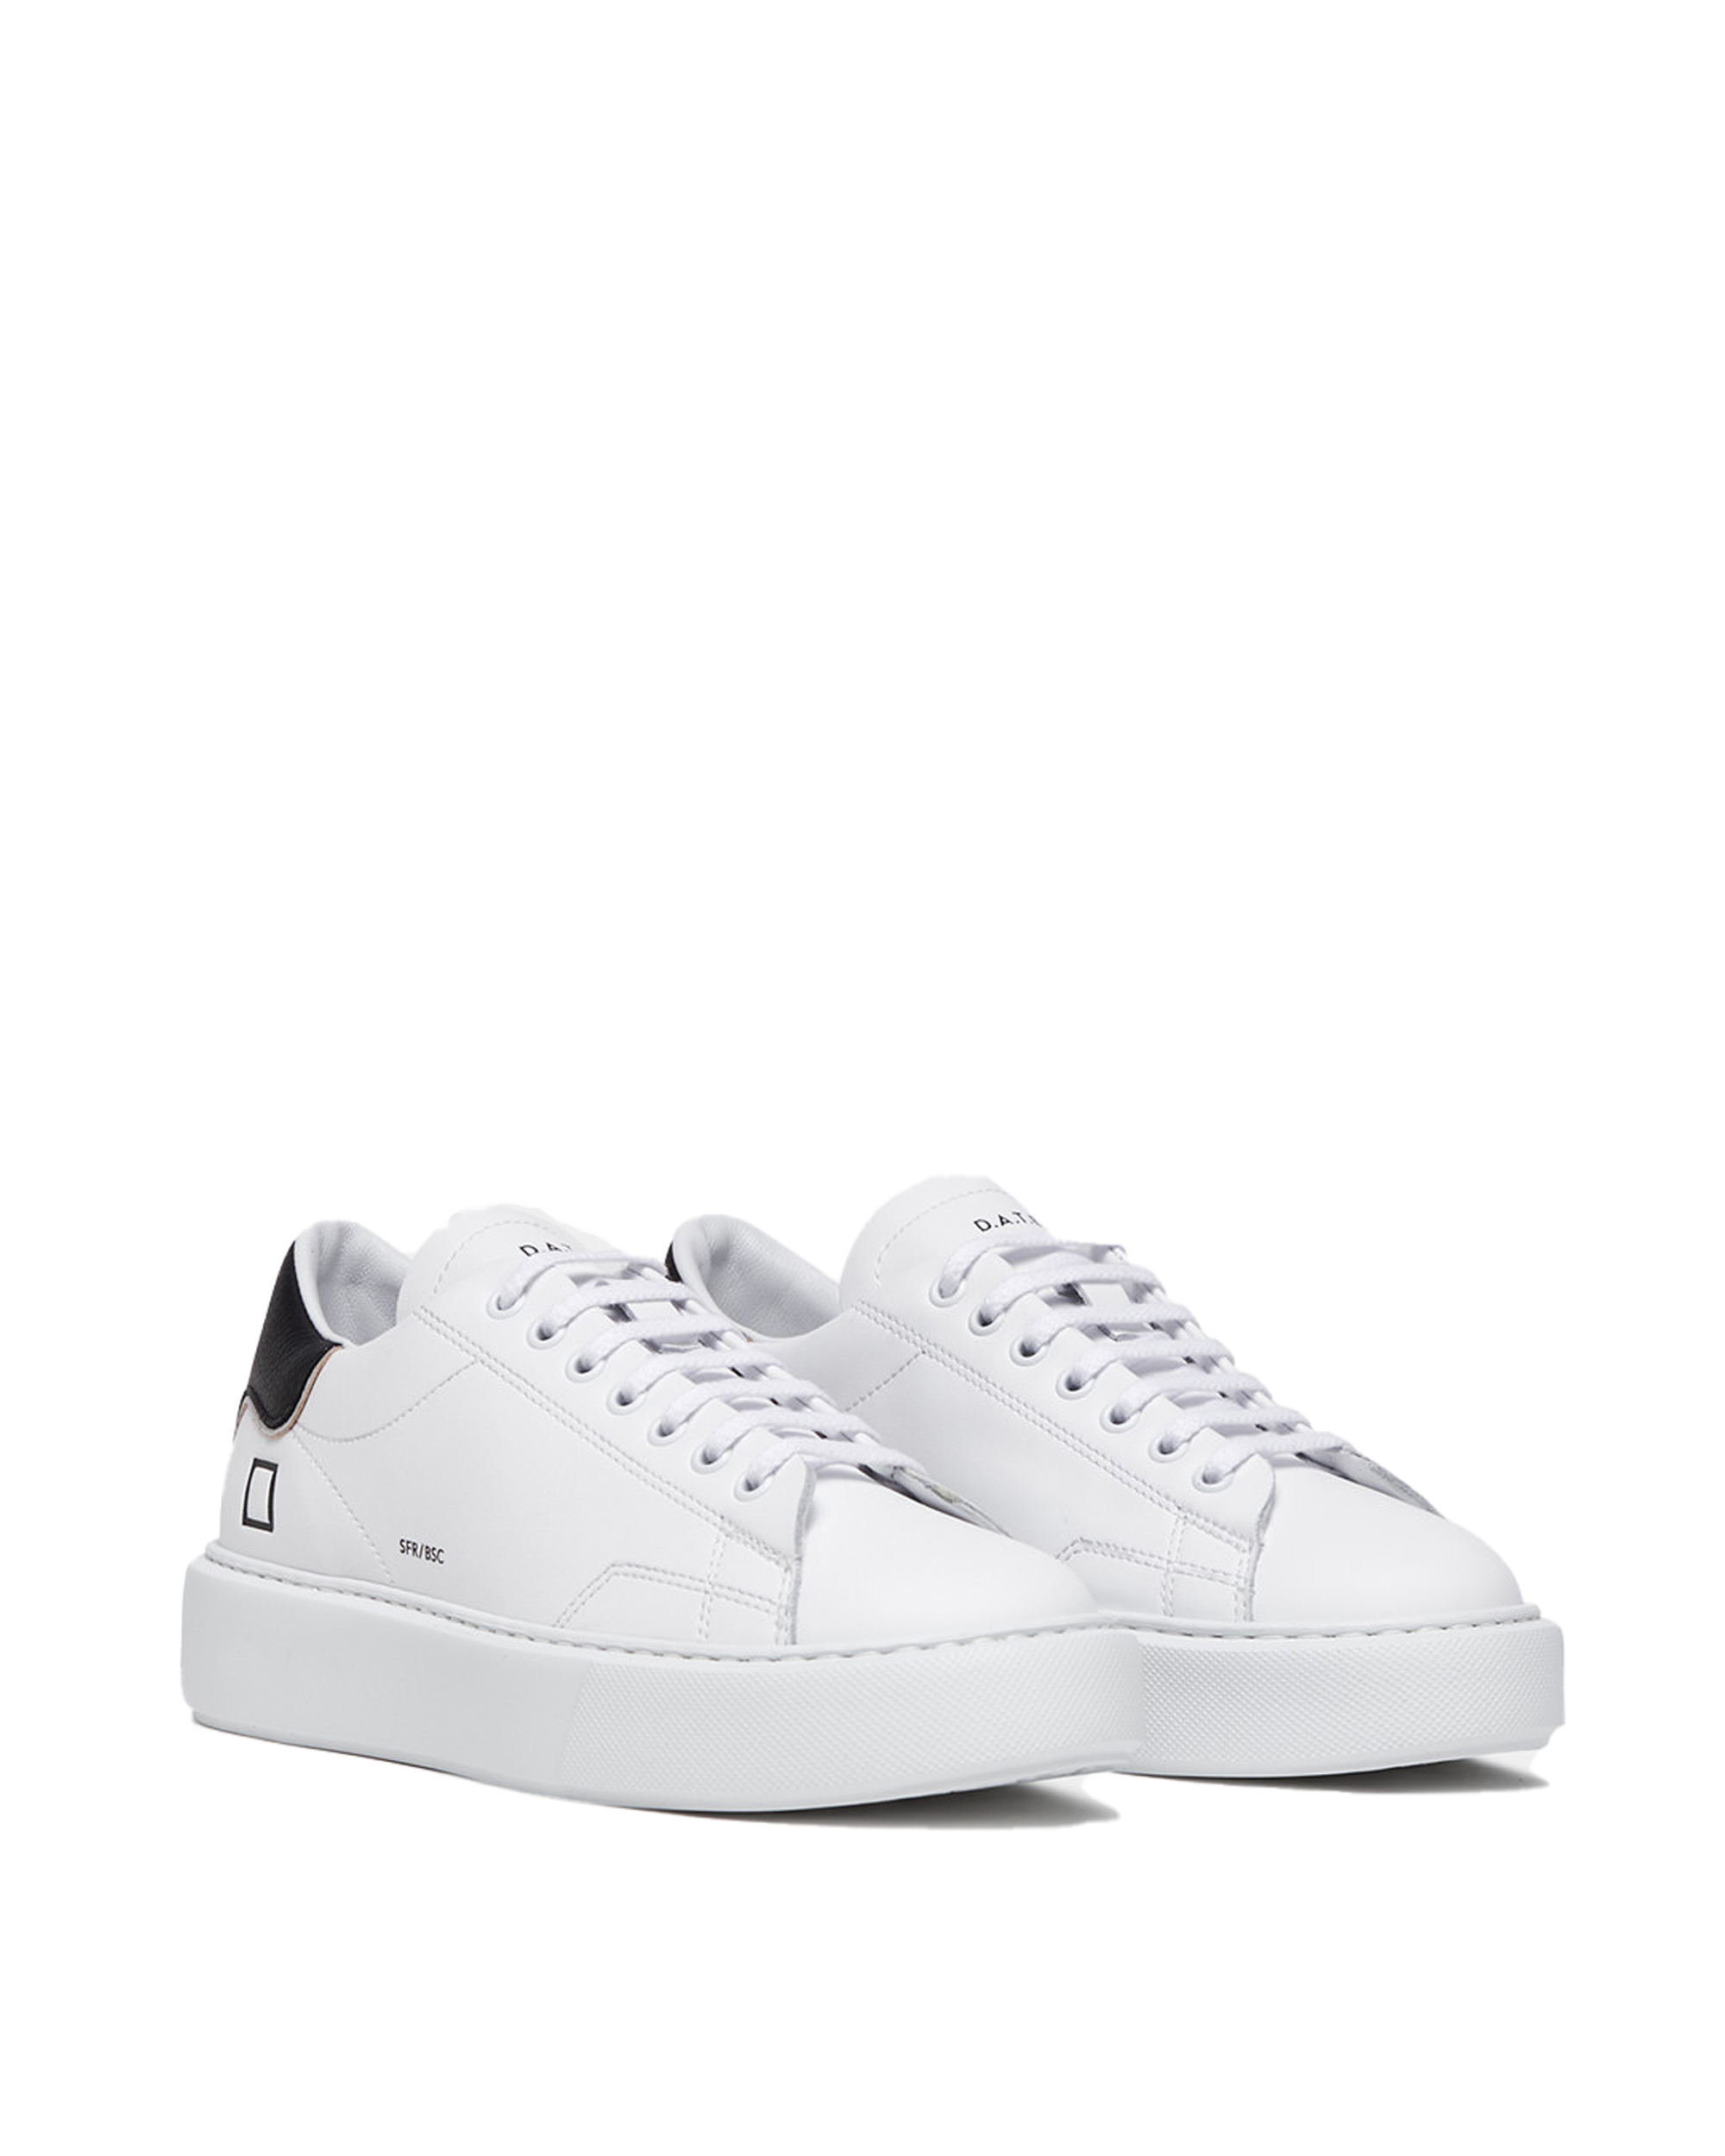 Shop Date Sneaker Sfera Basic White Black